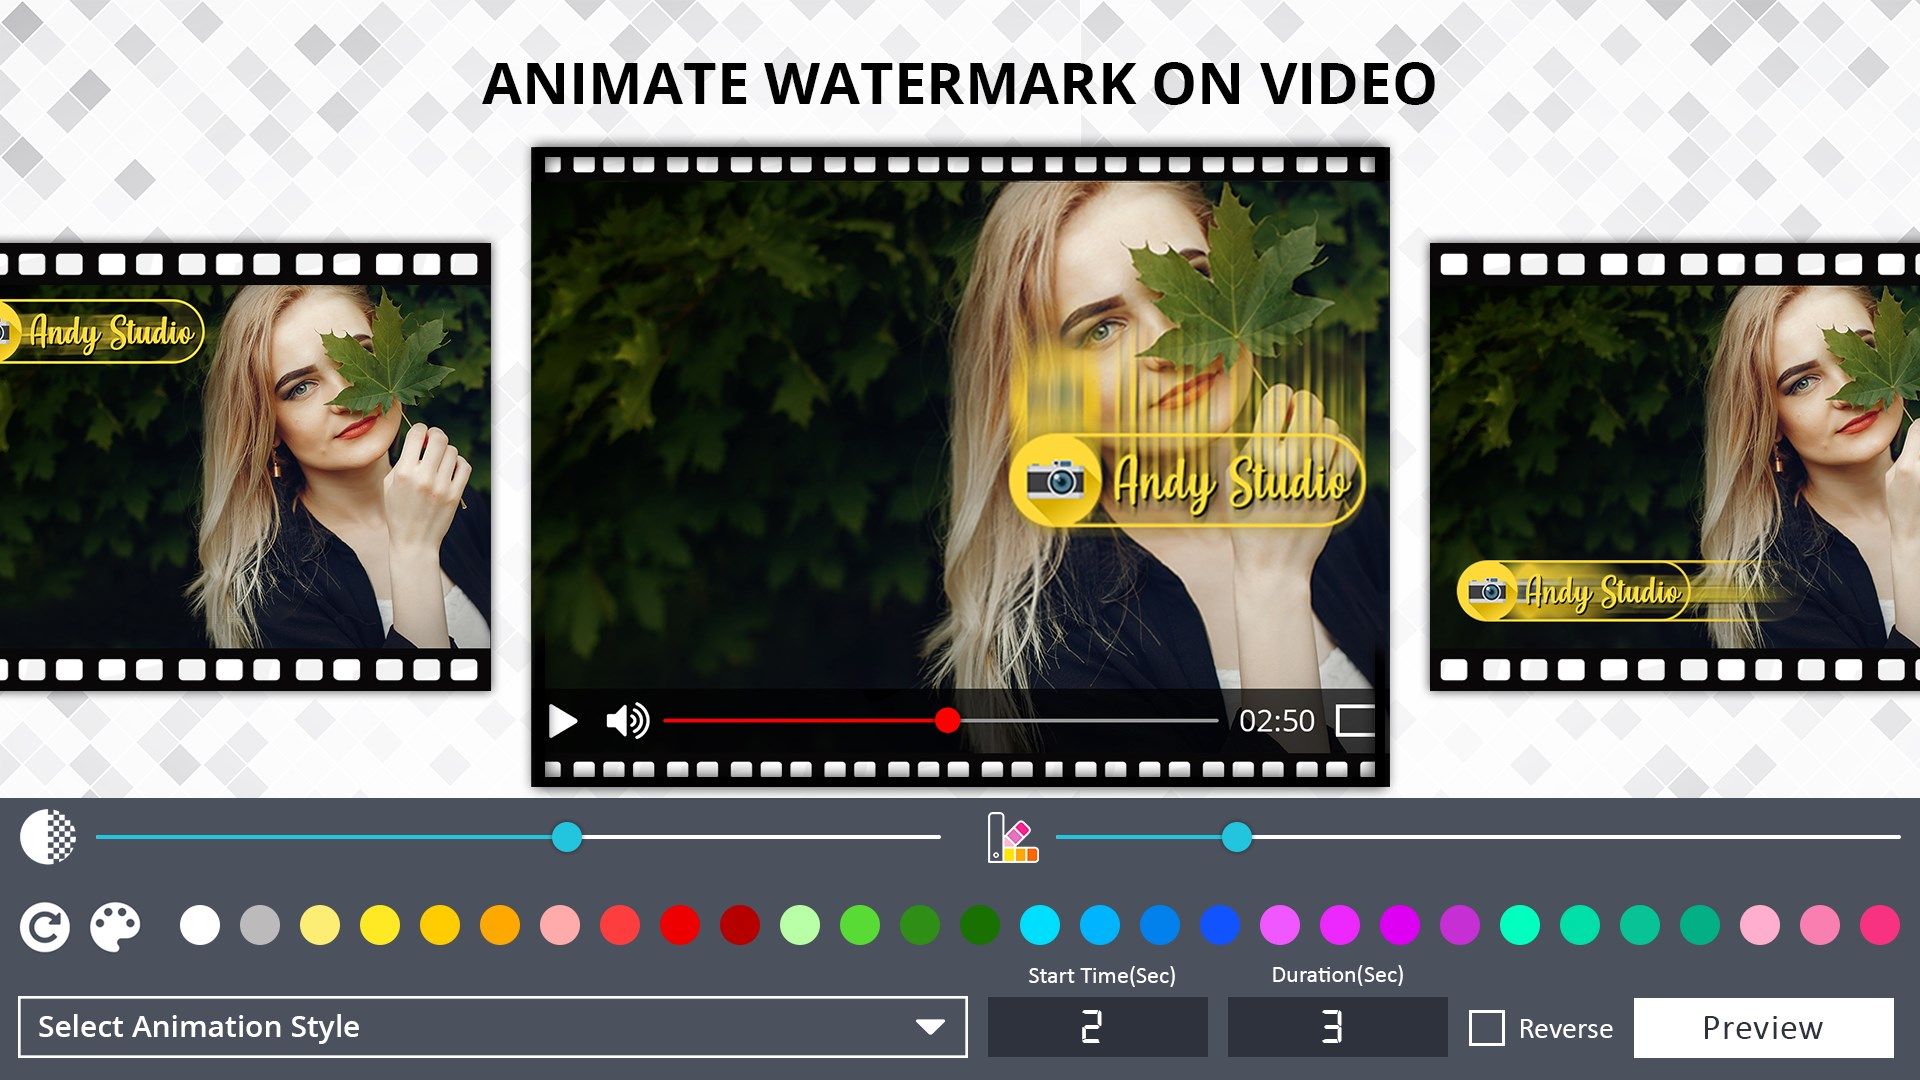 Animated Watermark on Video